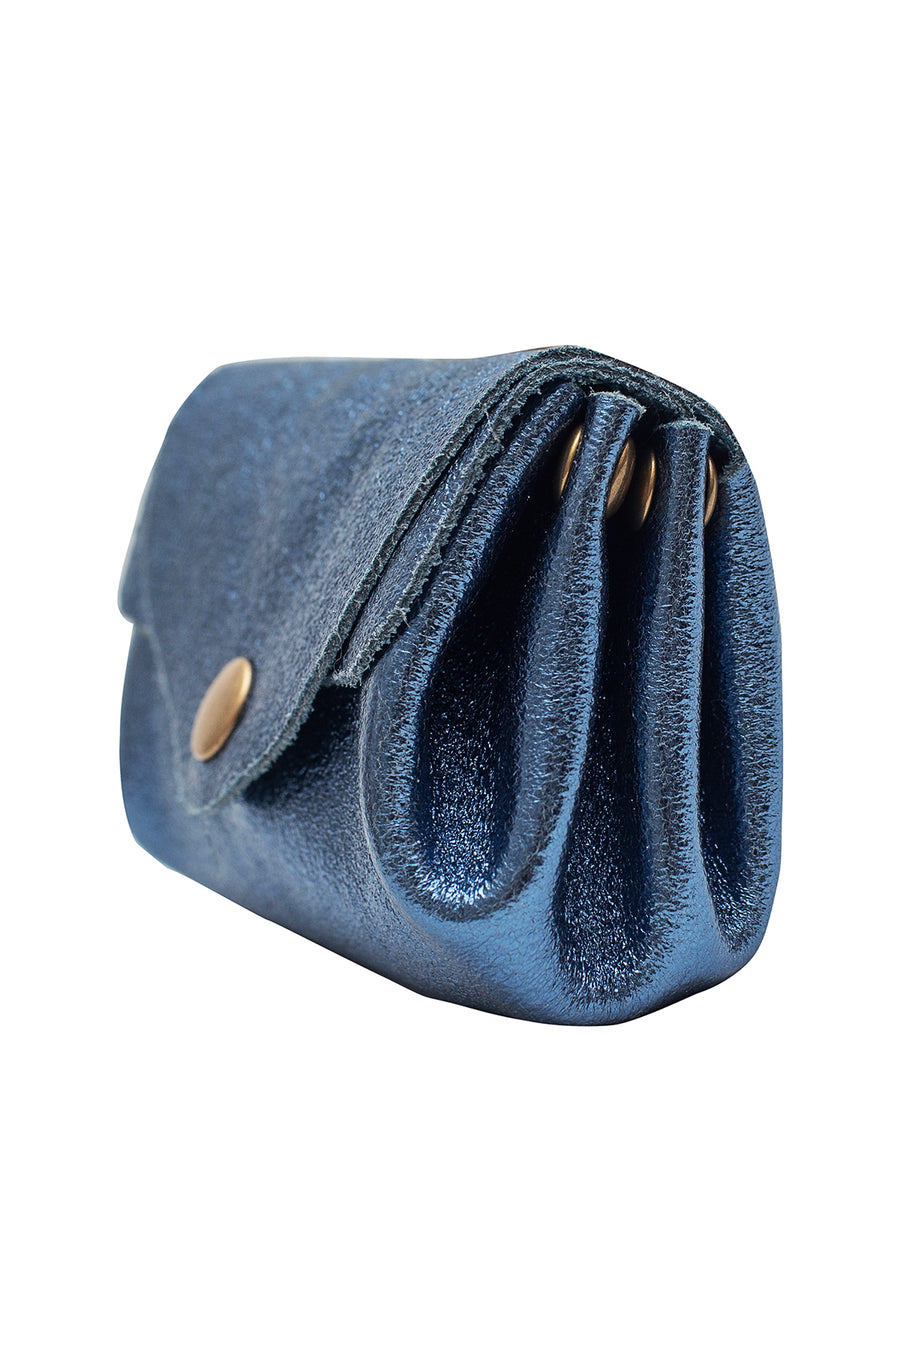 Porte-monnaie sac SUZIE METAL - Bleu métal